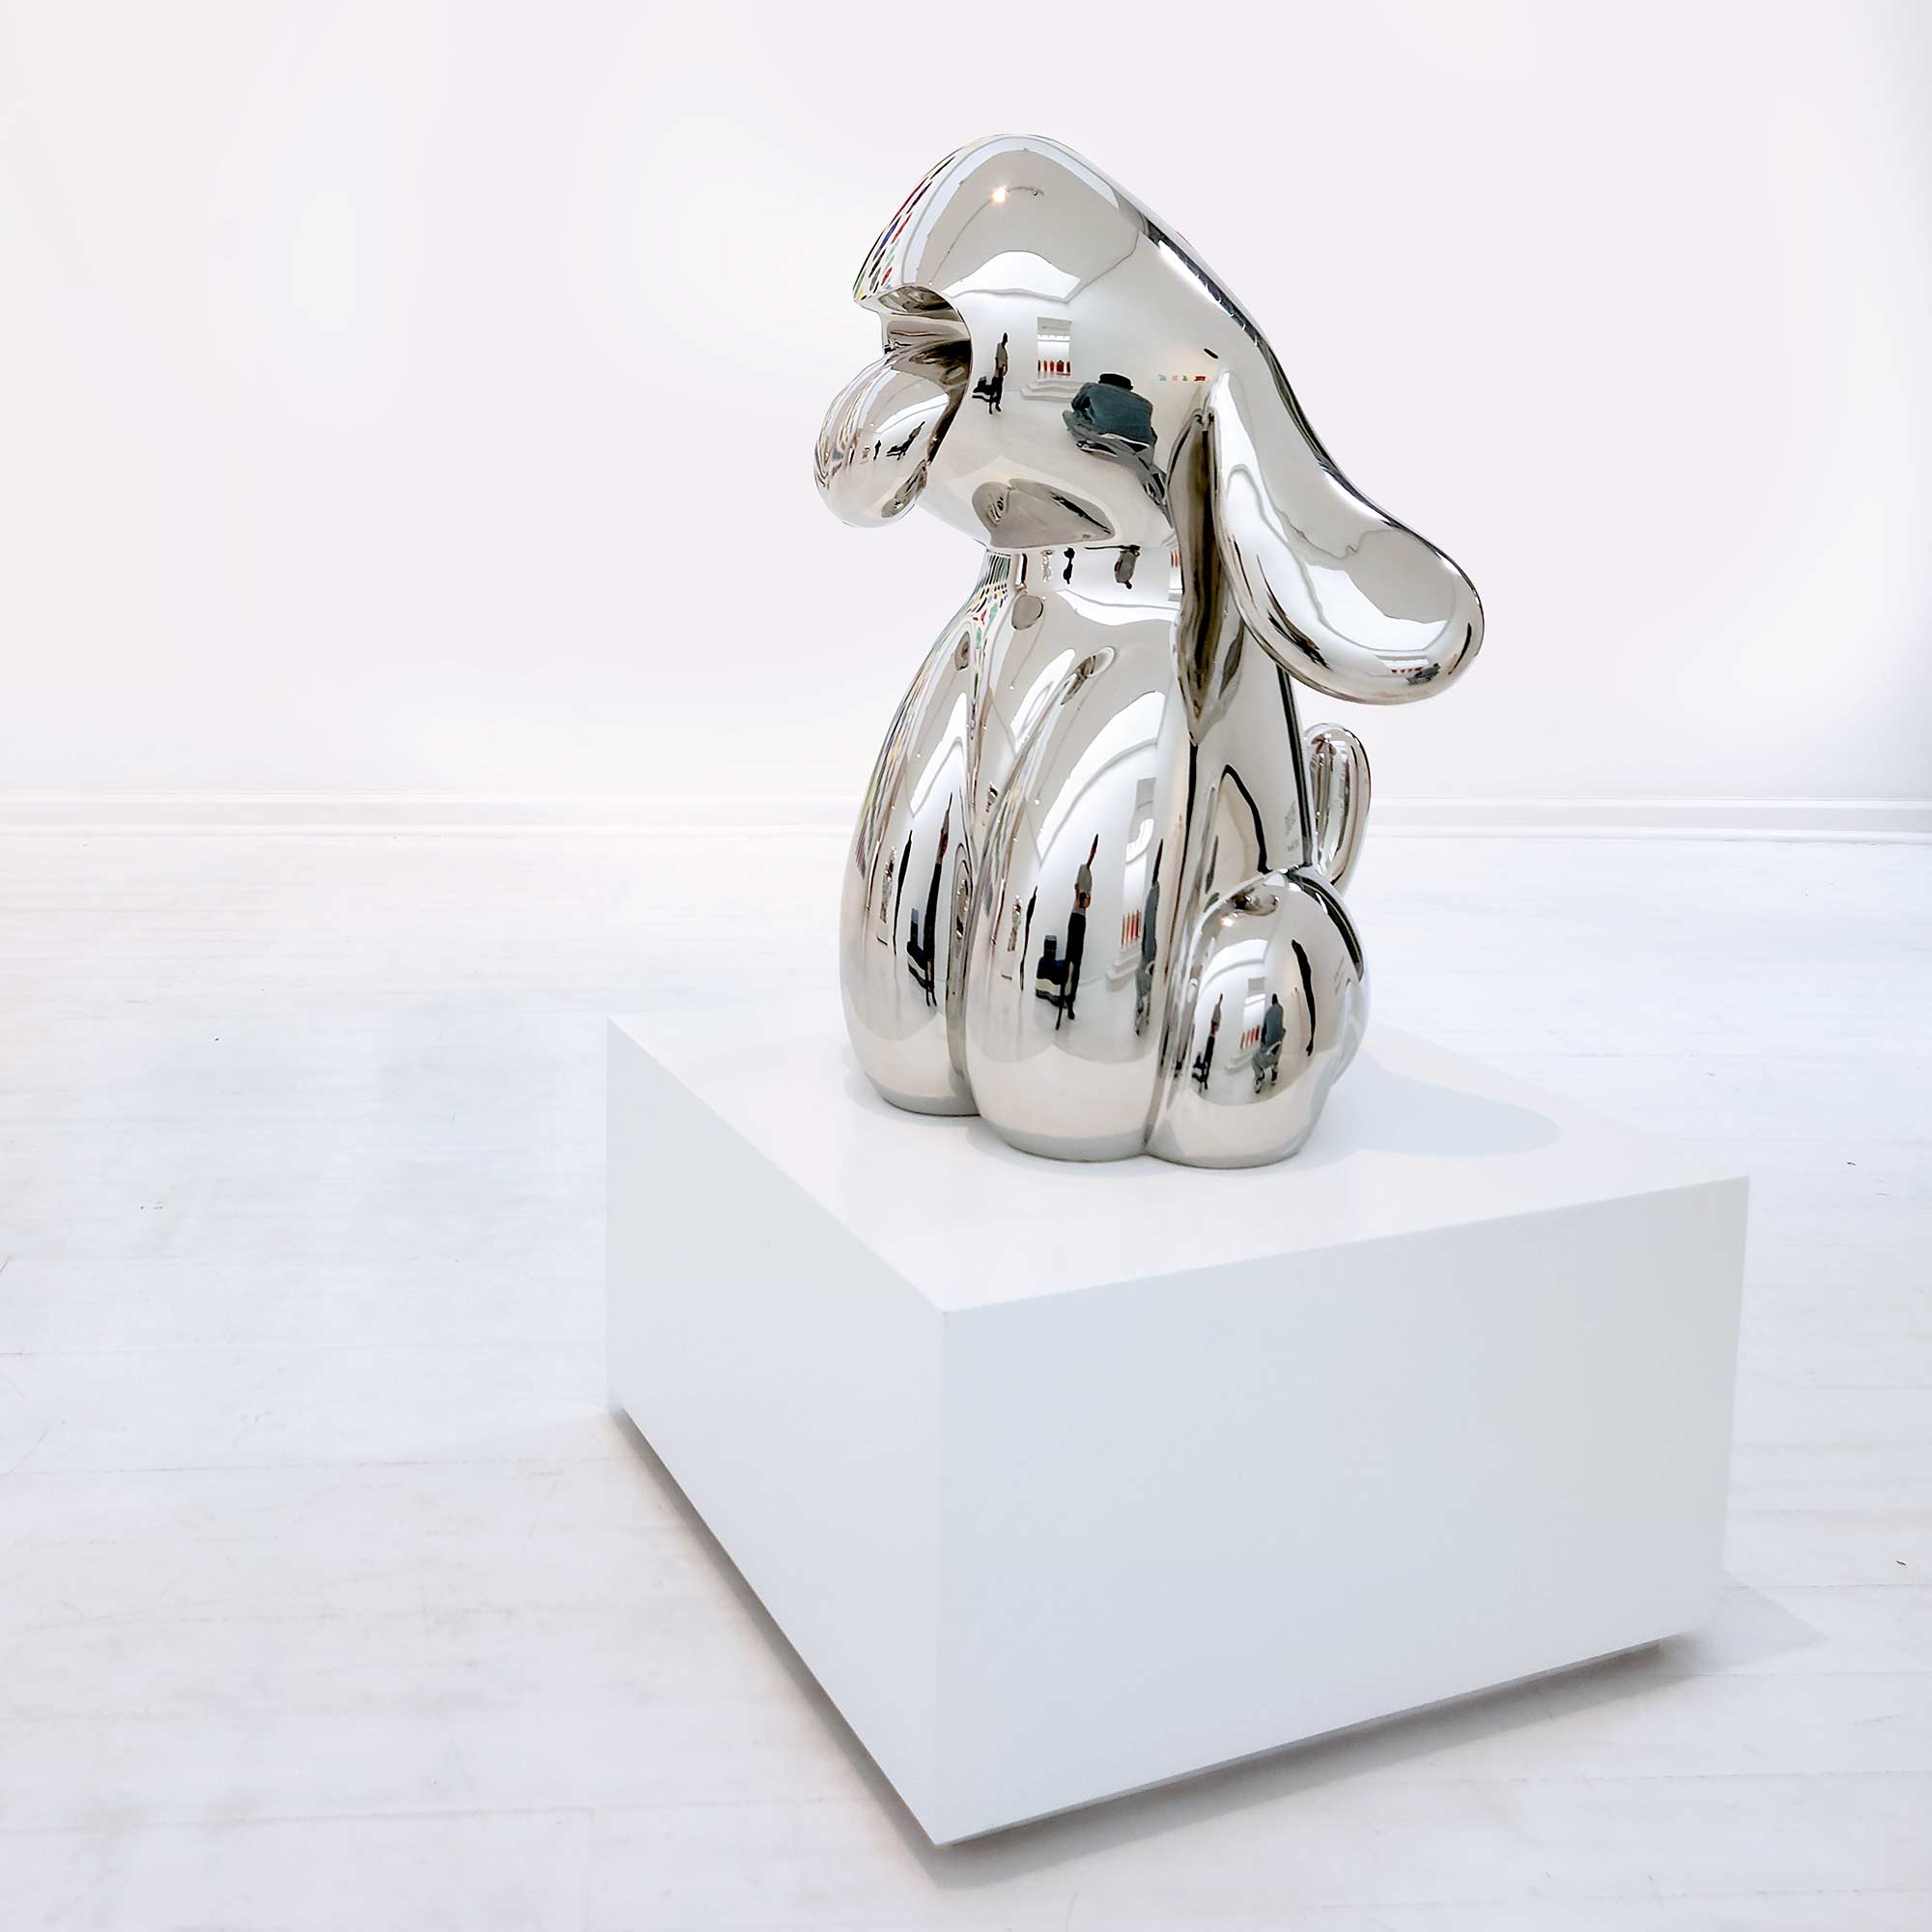 Dog Roar, Polished Stainless steel sculpture, 80 cm high by Ferdi B Dick, side view